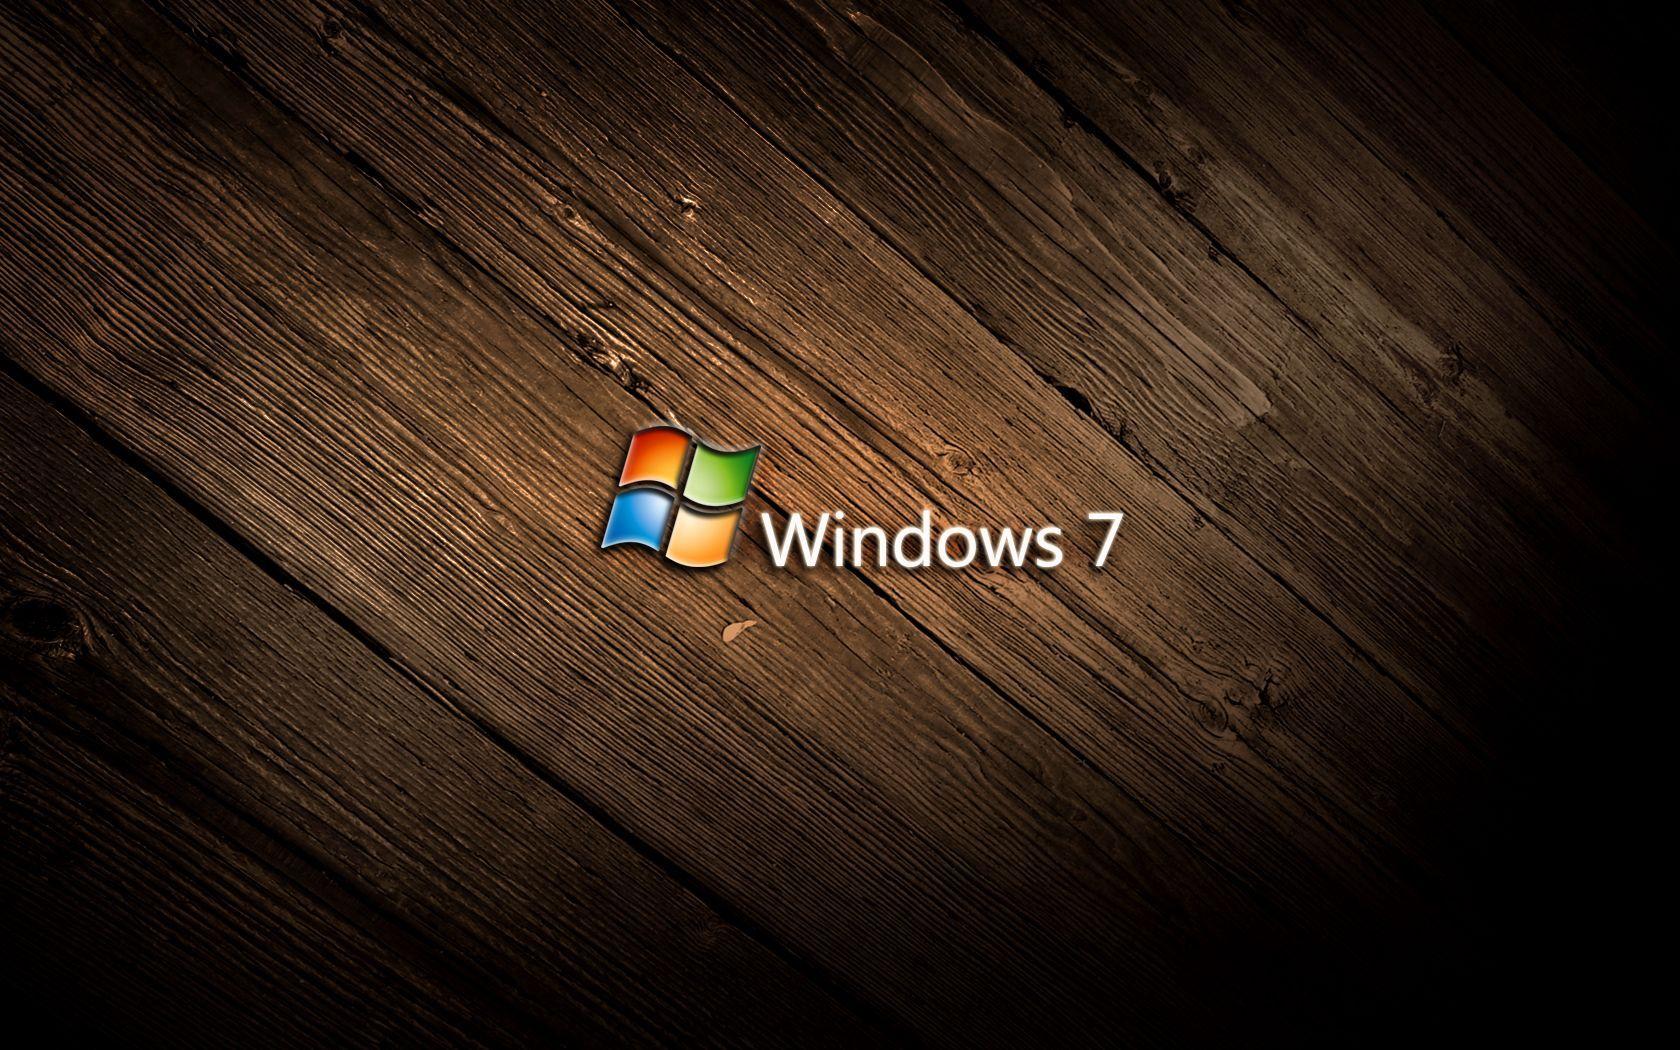 1680x1050 HD Hình nền Windows 7 Windows 7 Graphics Windows 7 HD Windows 7 HD Wallpaper Top For Desktop.  Hình nền Windows, Hình nền HD cho máy tính xách tay, Hình nền Apple